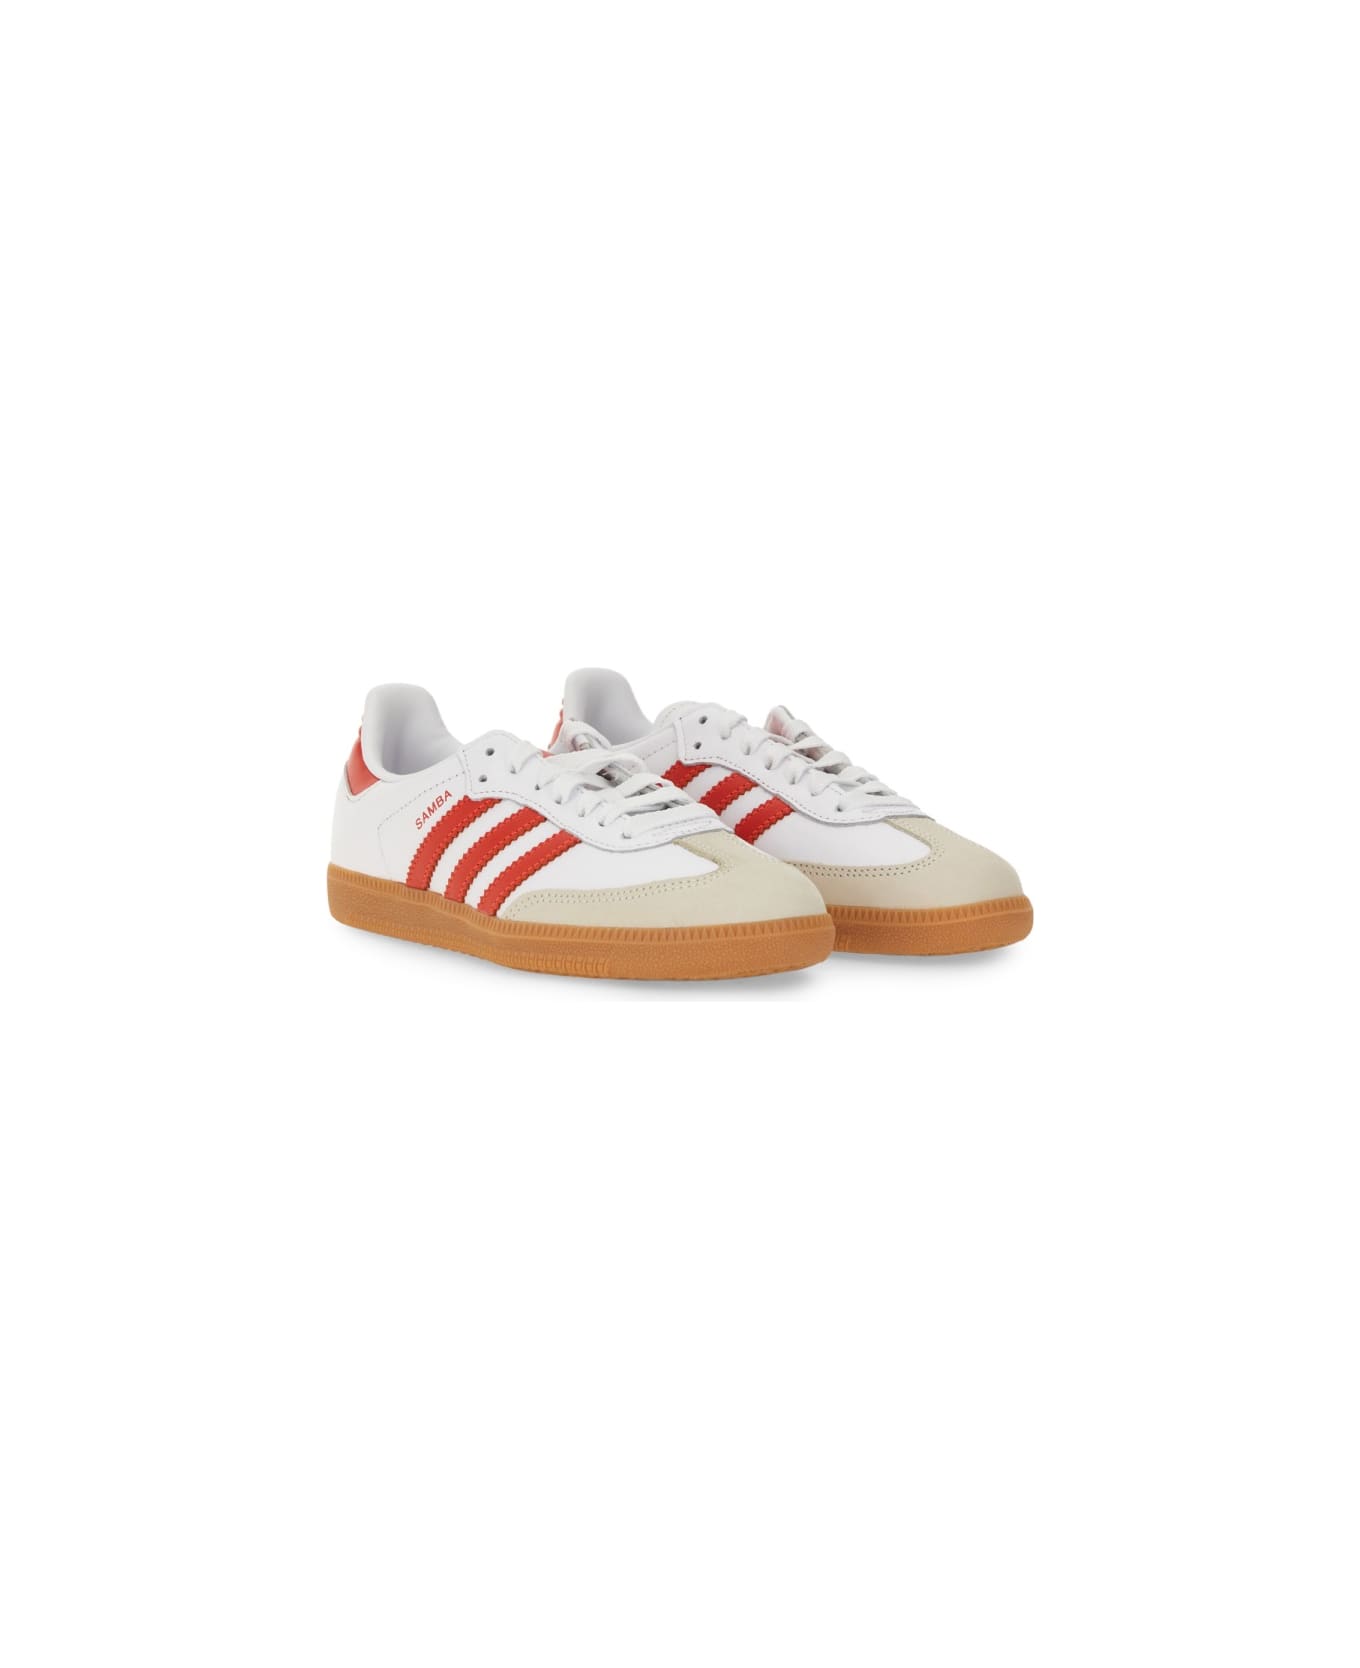 Adidas Originals Samba Og Sneakers - Wht Solred